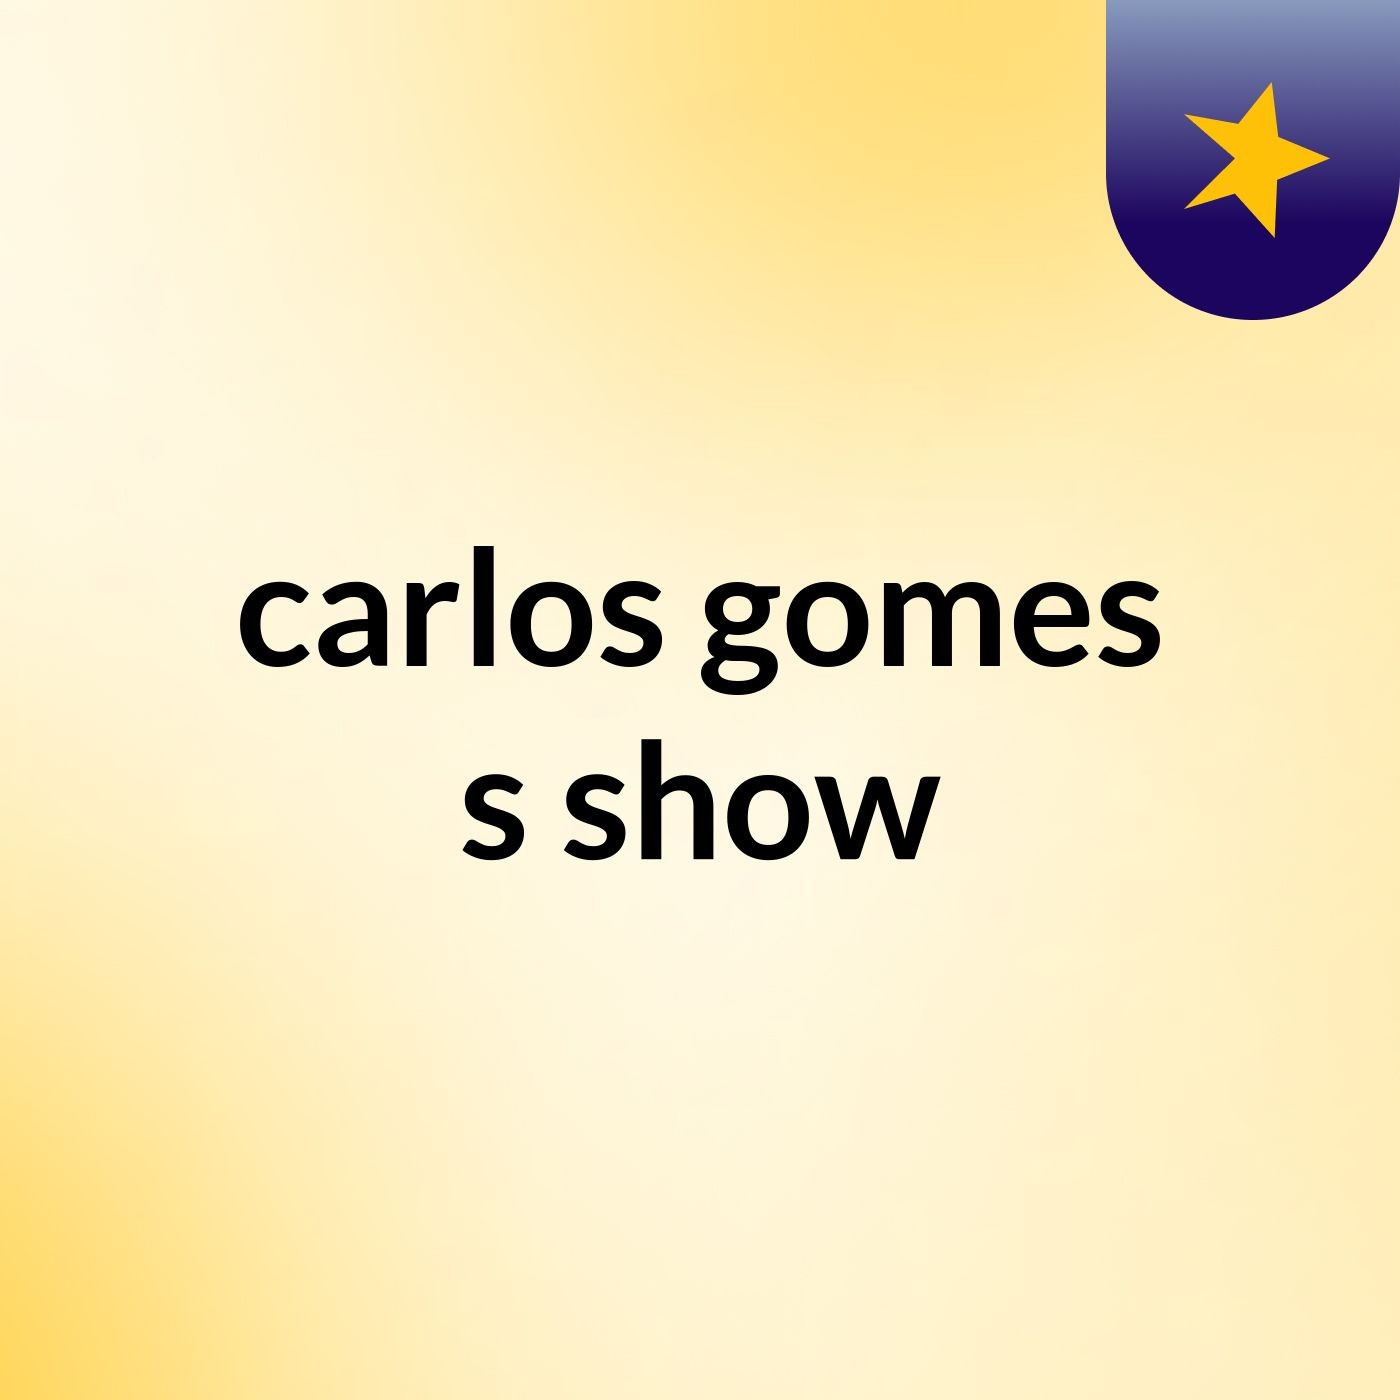 carlos gomes's show